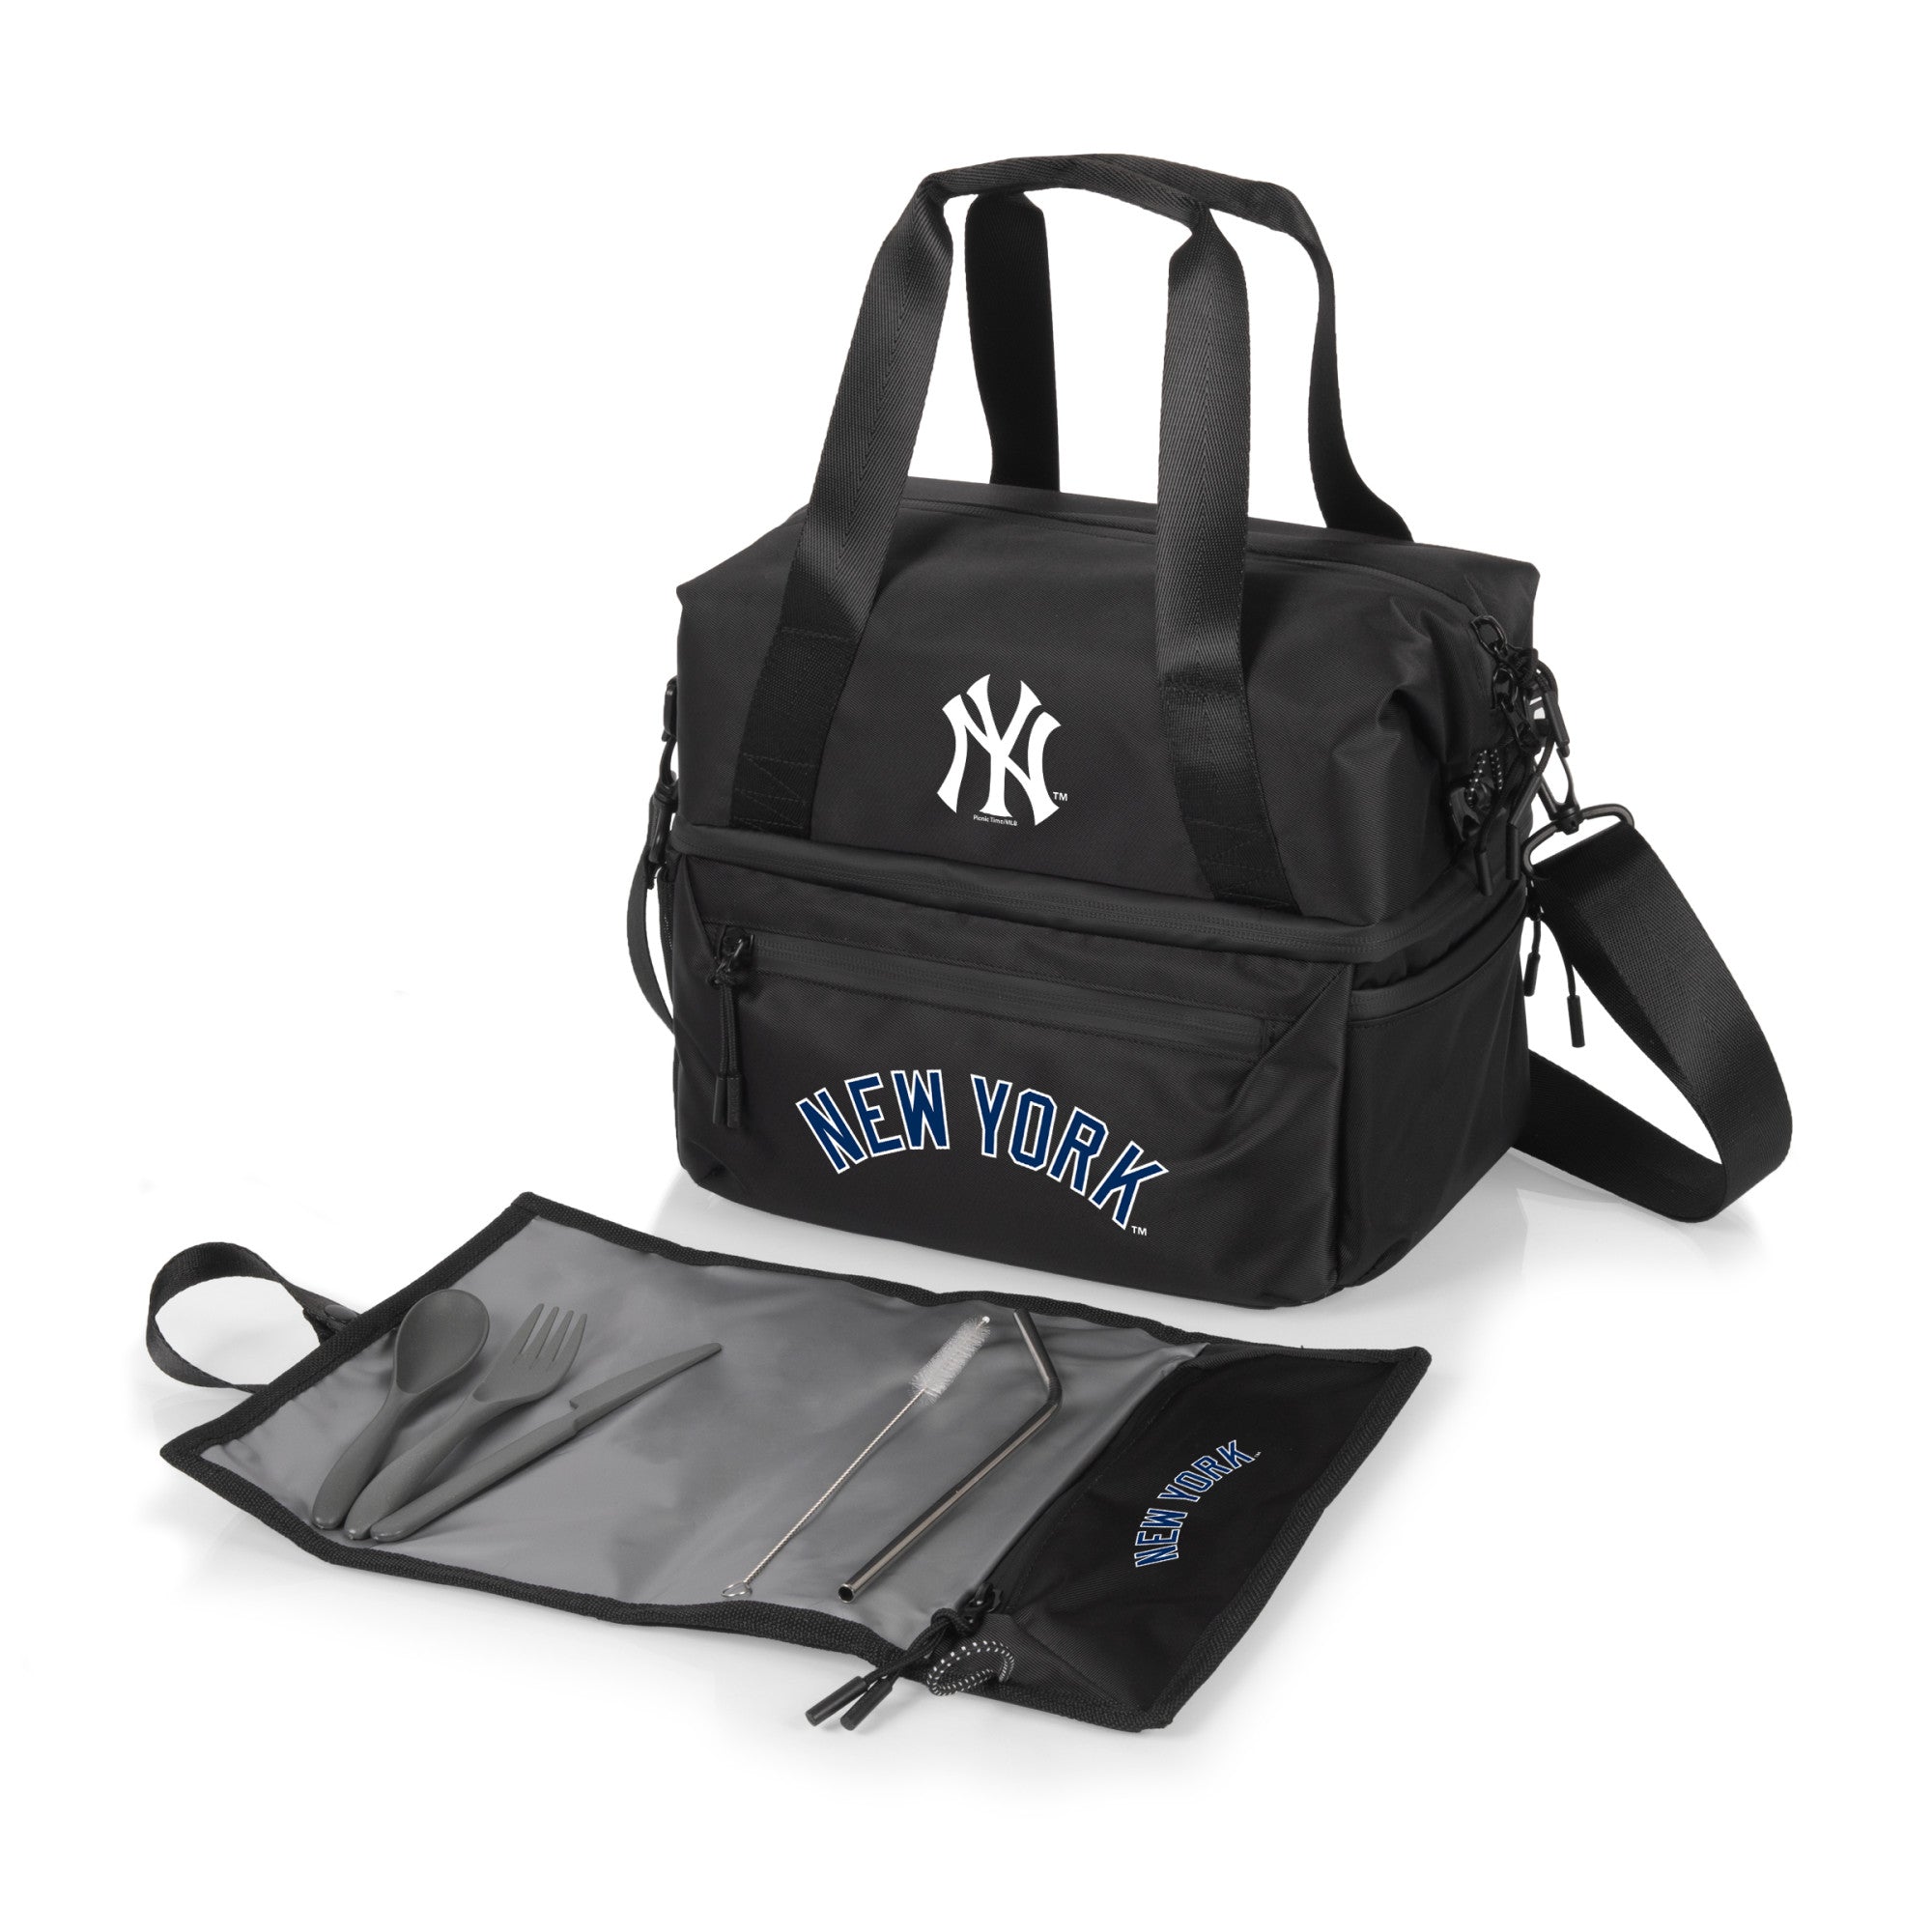 New York Yankees - Tarana Lunch Bag Cooler with Utensils